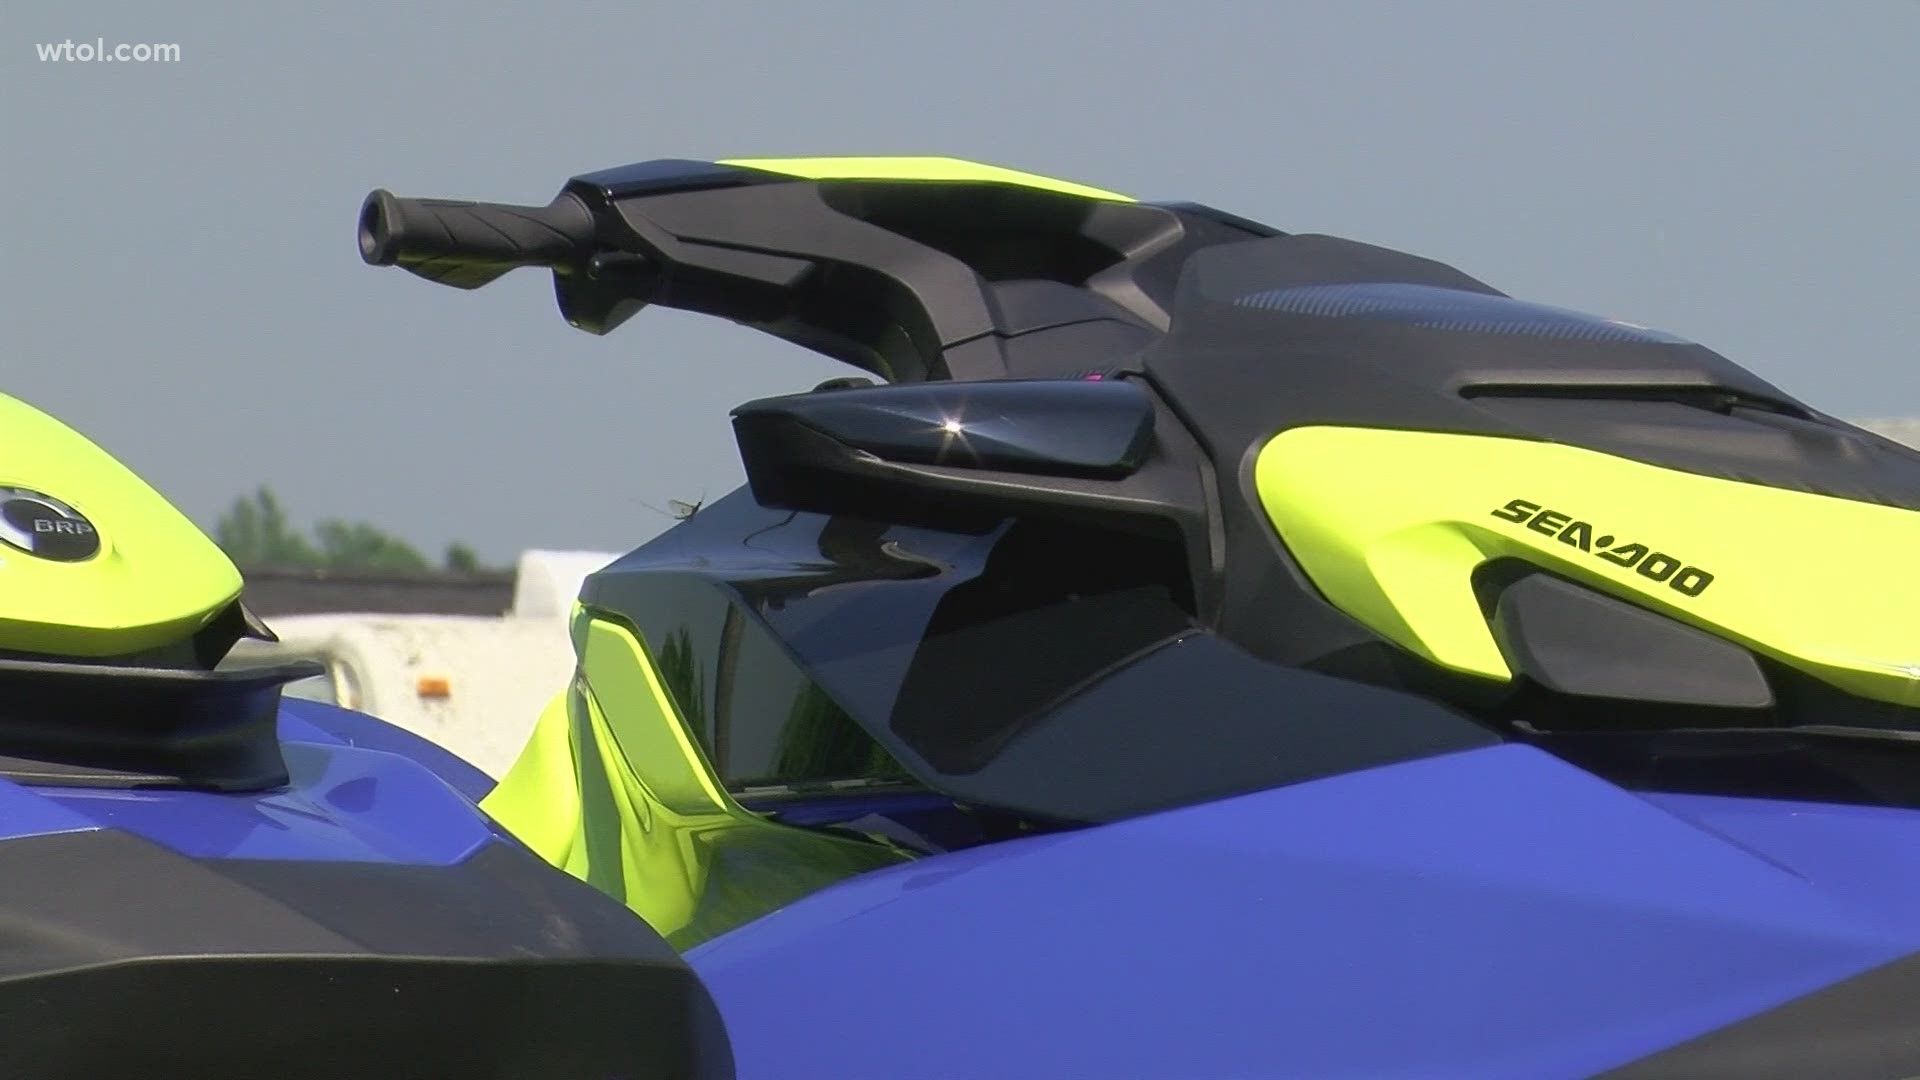 Skisi Xxx Video - Do police on Lake Erie use jet skis? | wtol.com